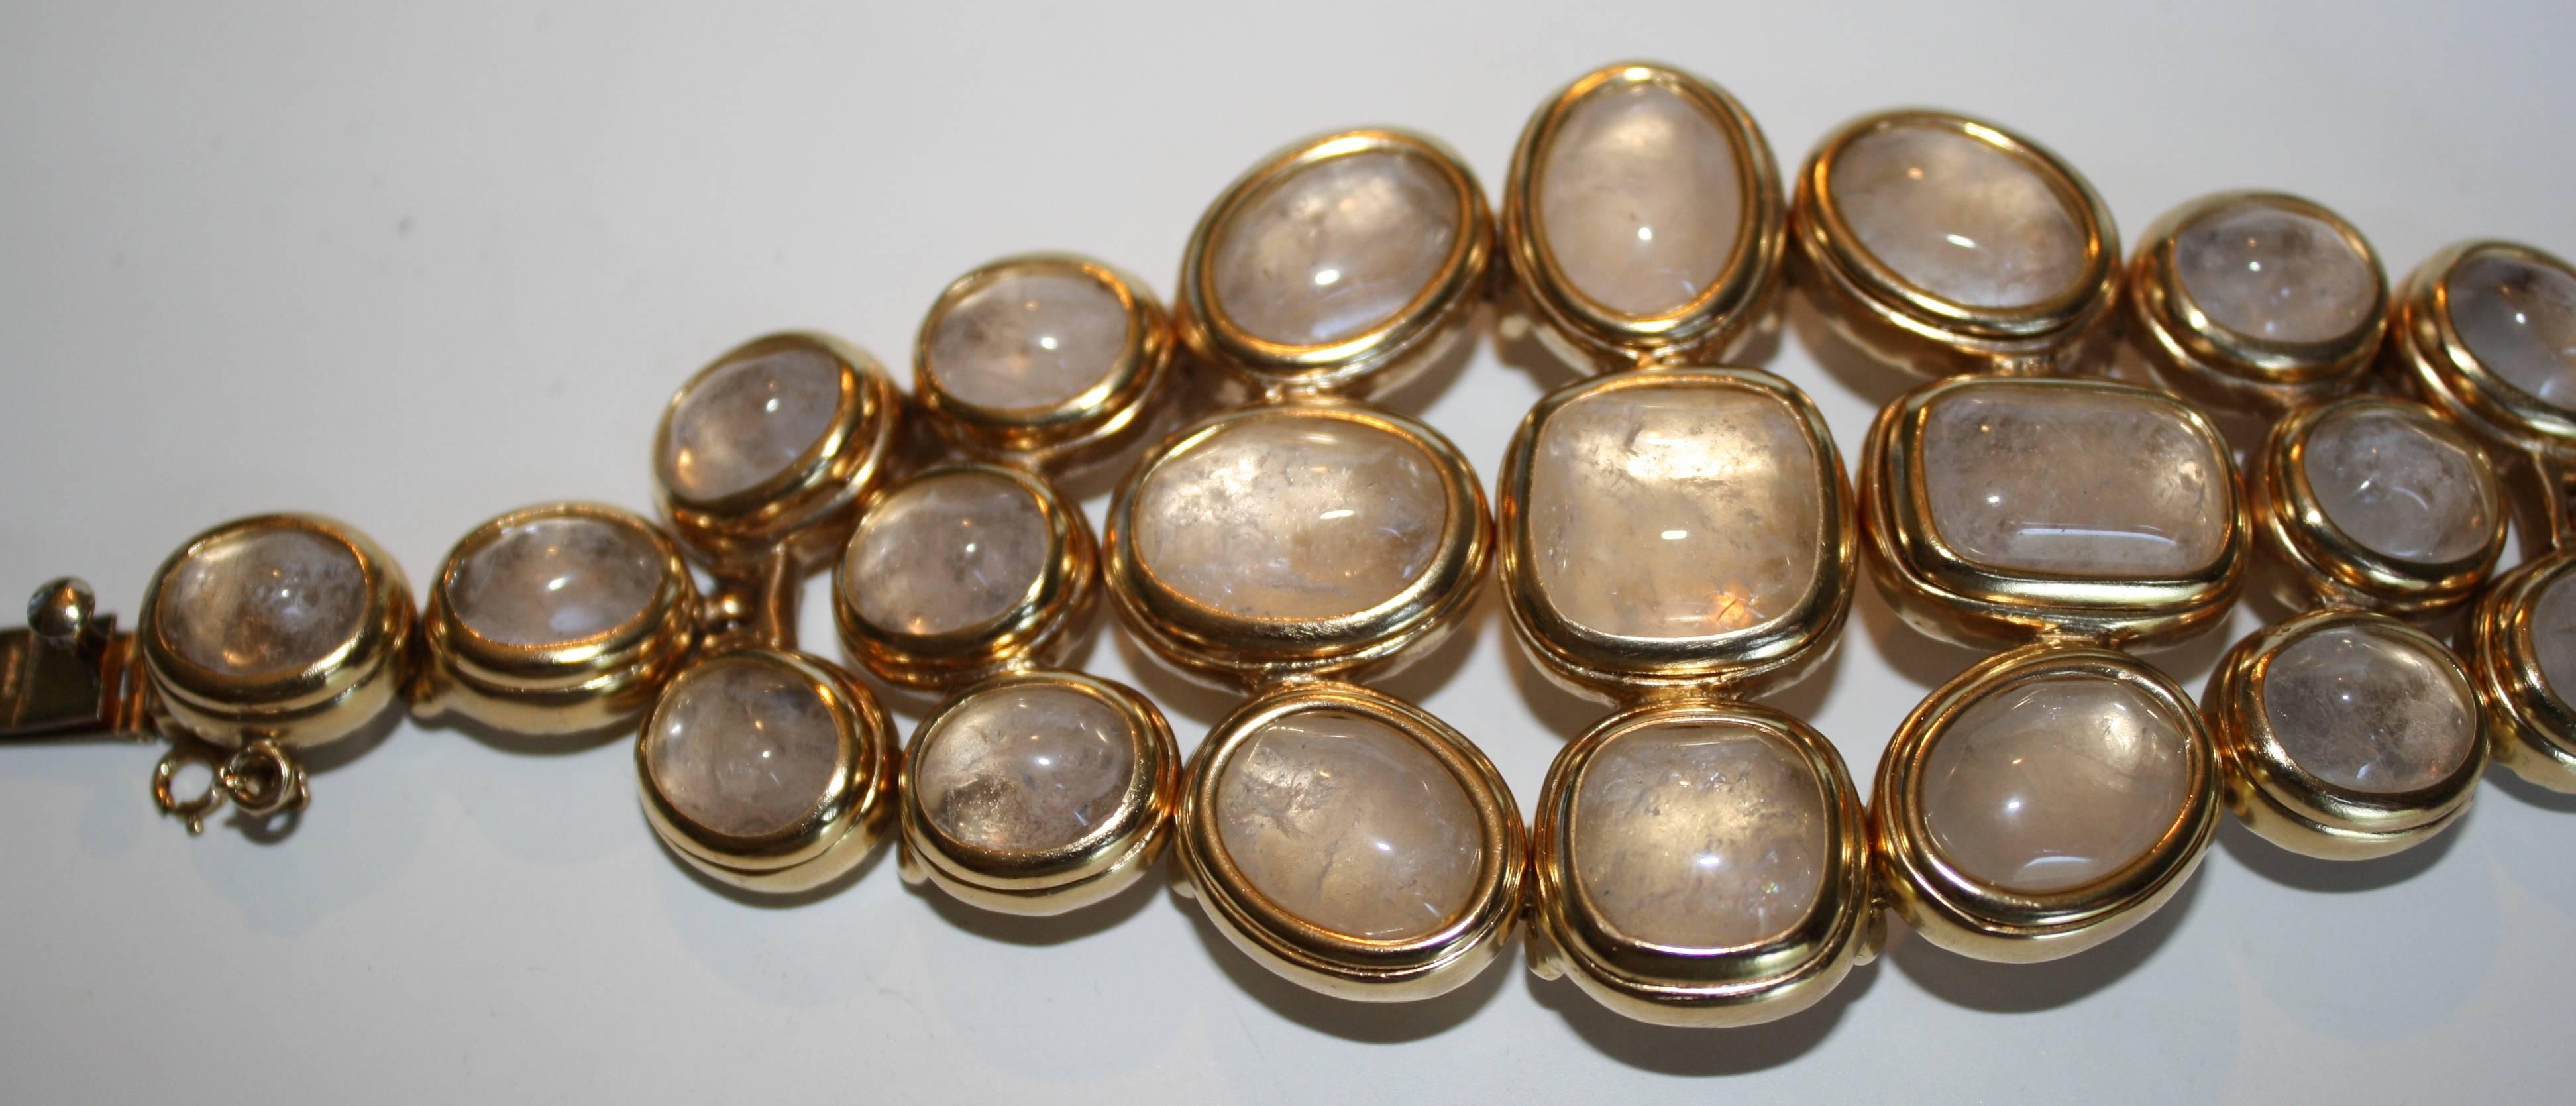 Goossens Paris clear rock crystal bracelet set in pale gold. Decorative finish on reverse side. 

6.75